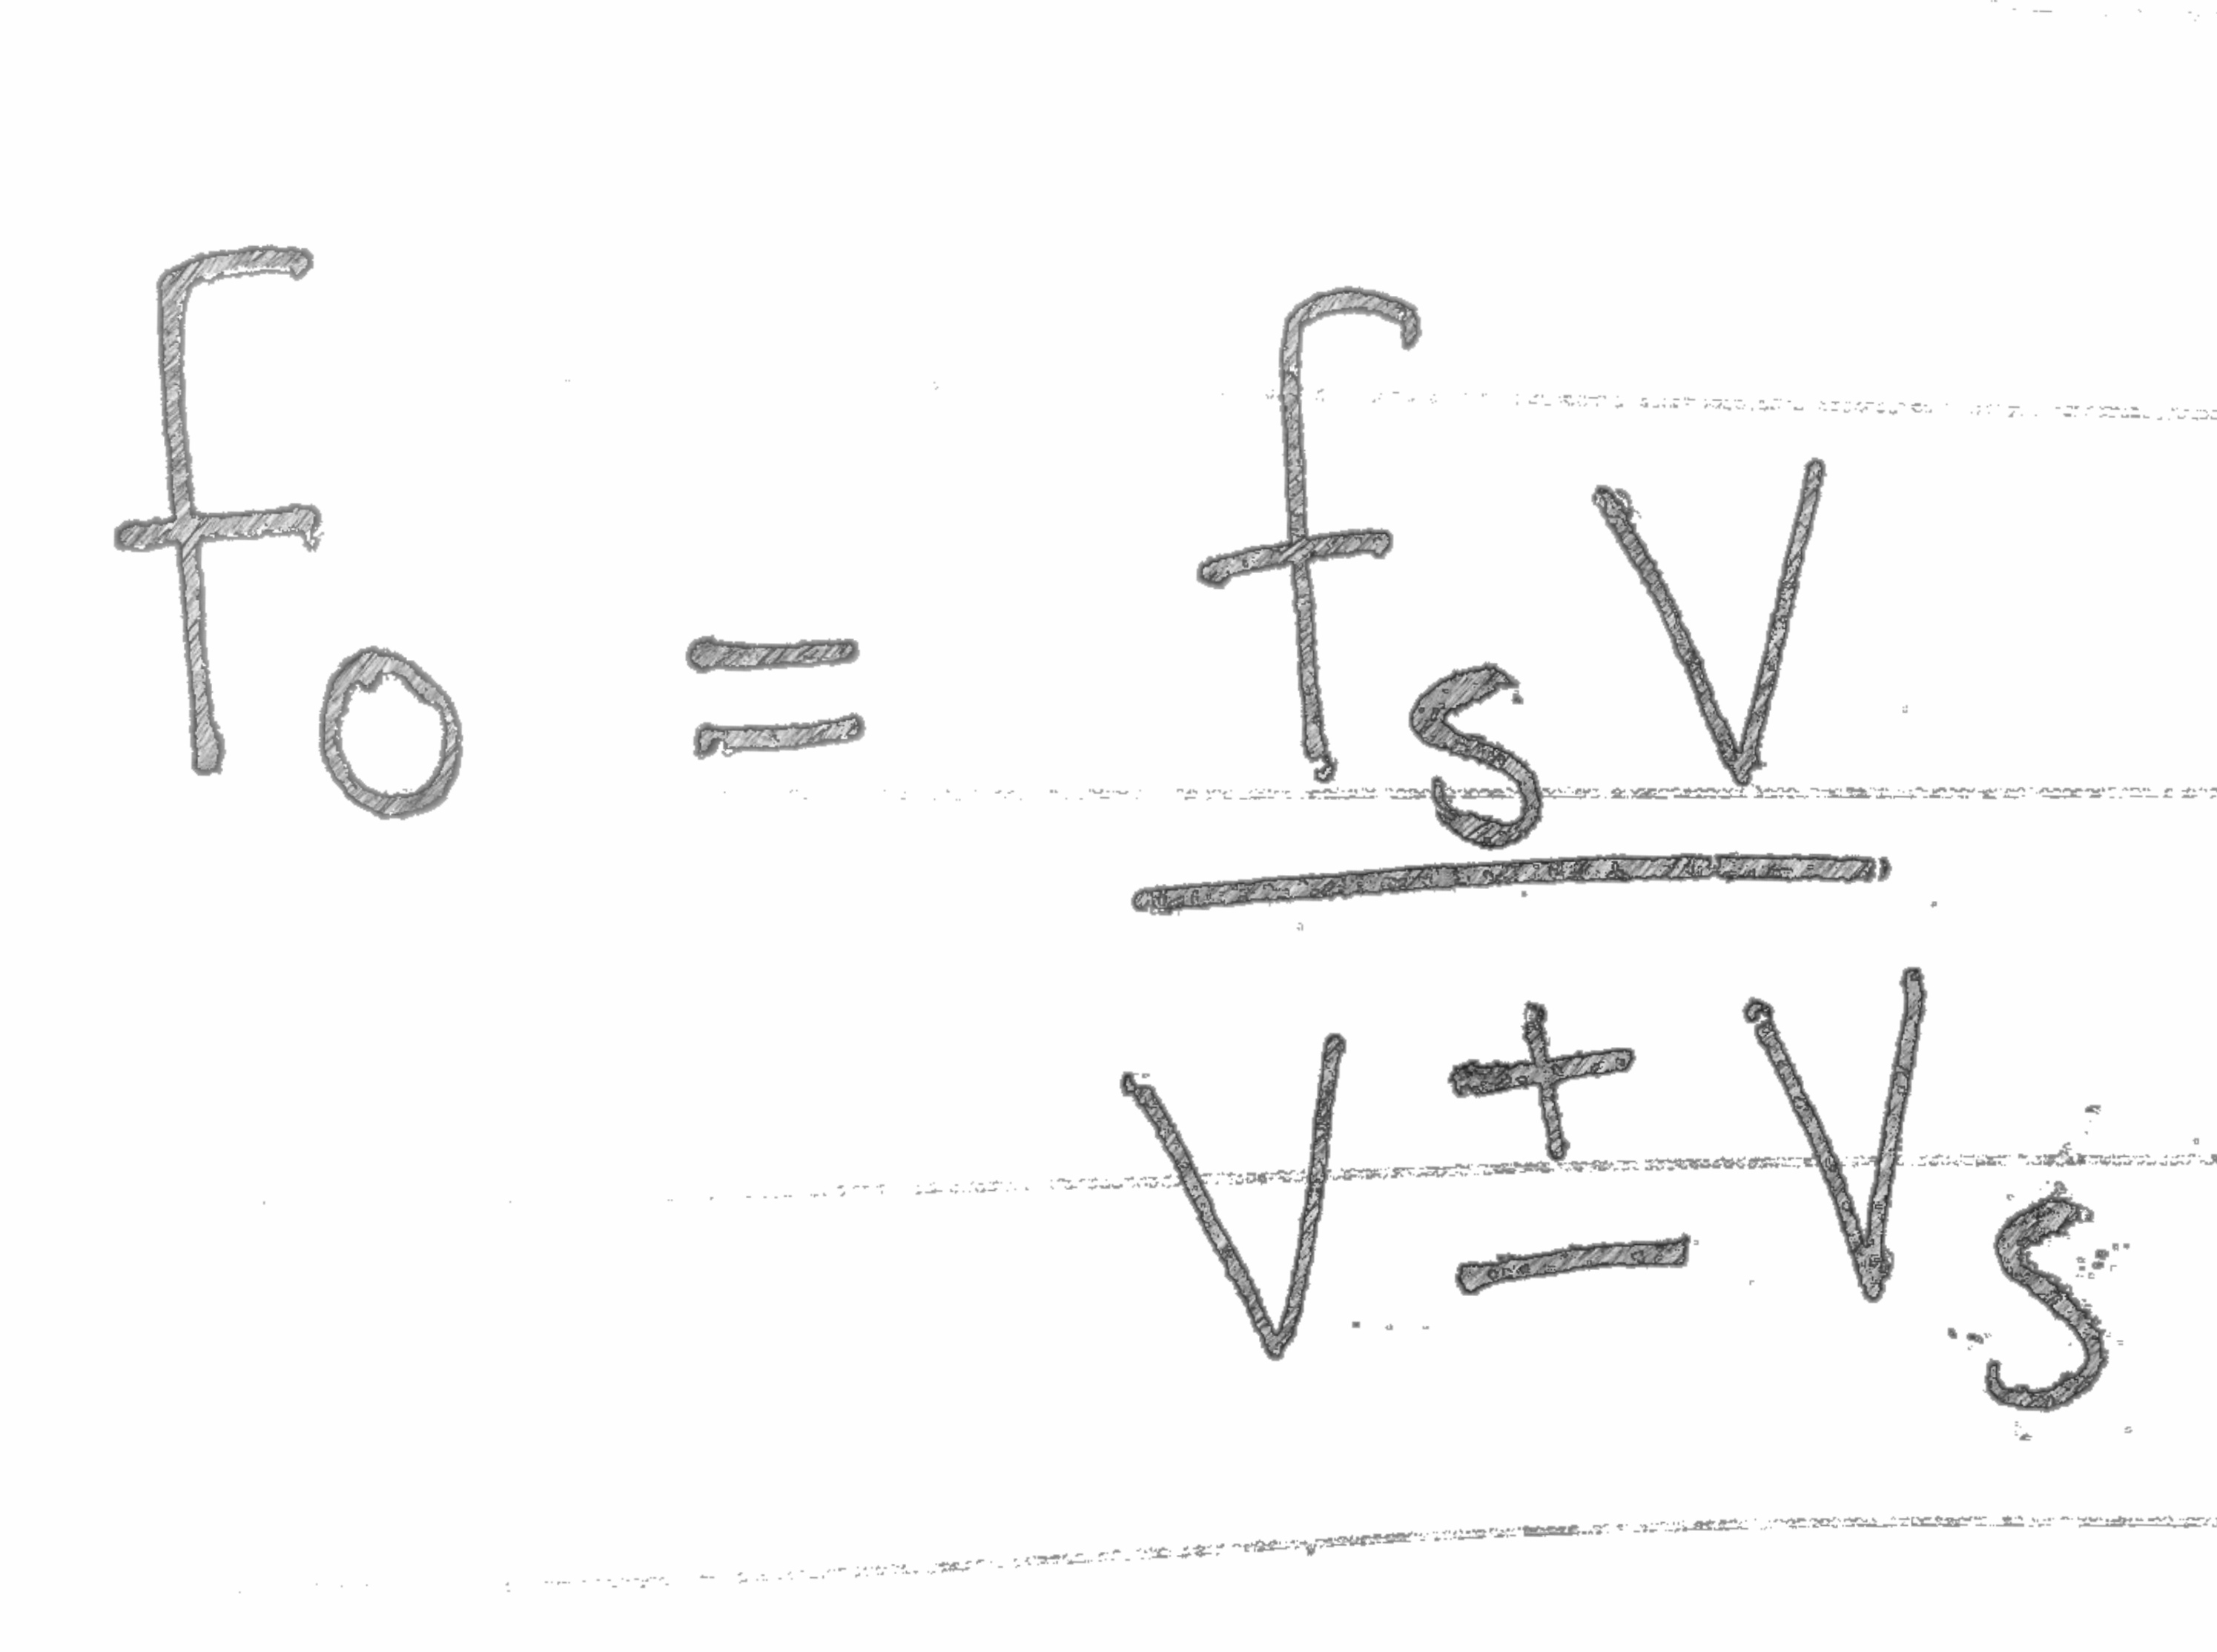 Revisezone - this diagram shows Doppler's effect full equation